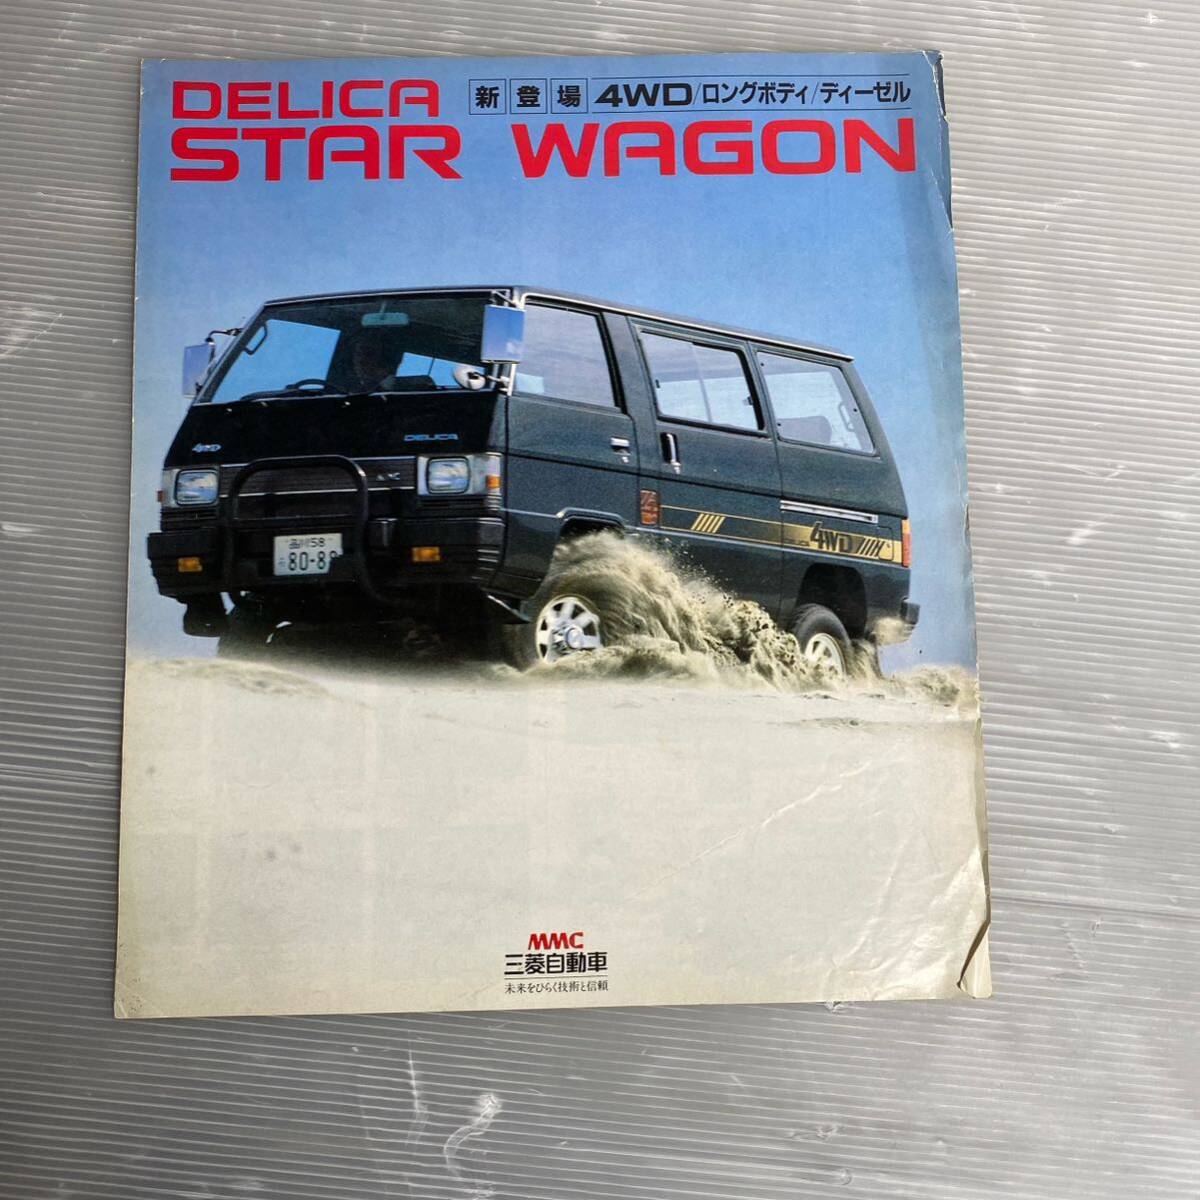  каталог Mitsubishi Delica Star Wagon старый машина каталог подлинная вещь 1013